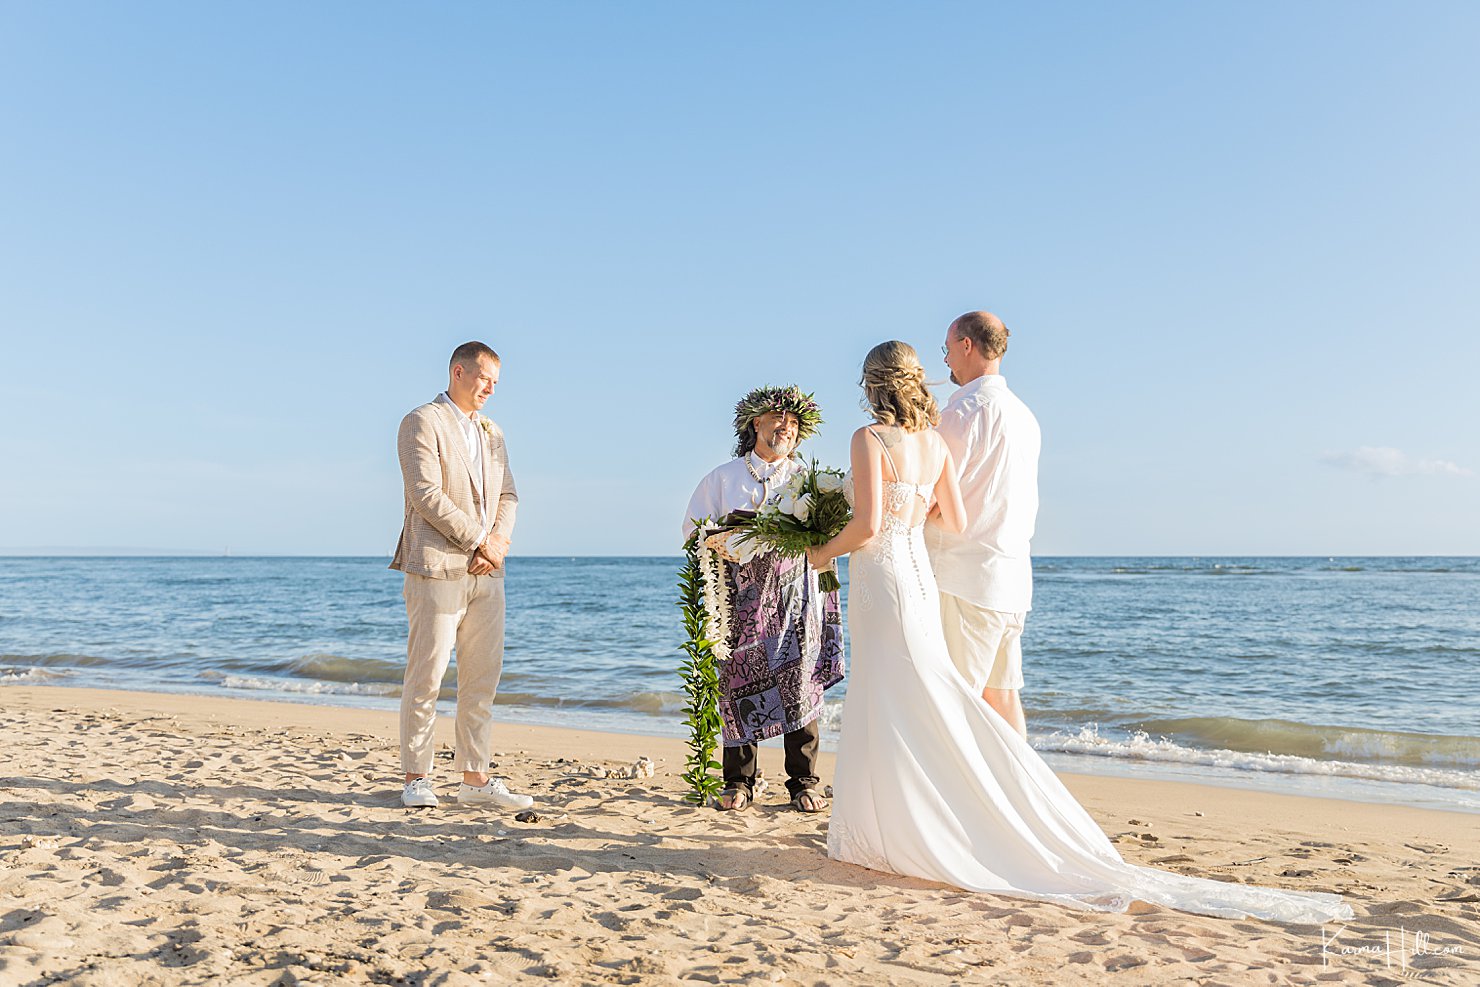 Bridal entrance at Maui beach wedding